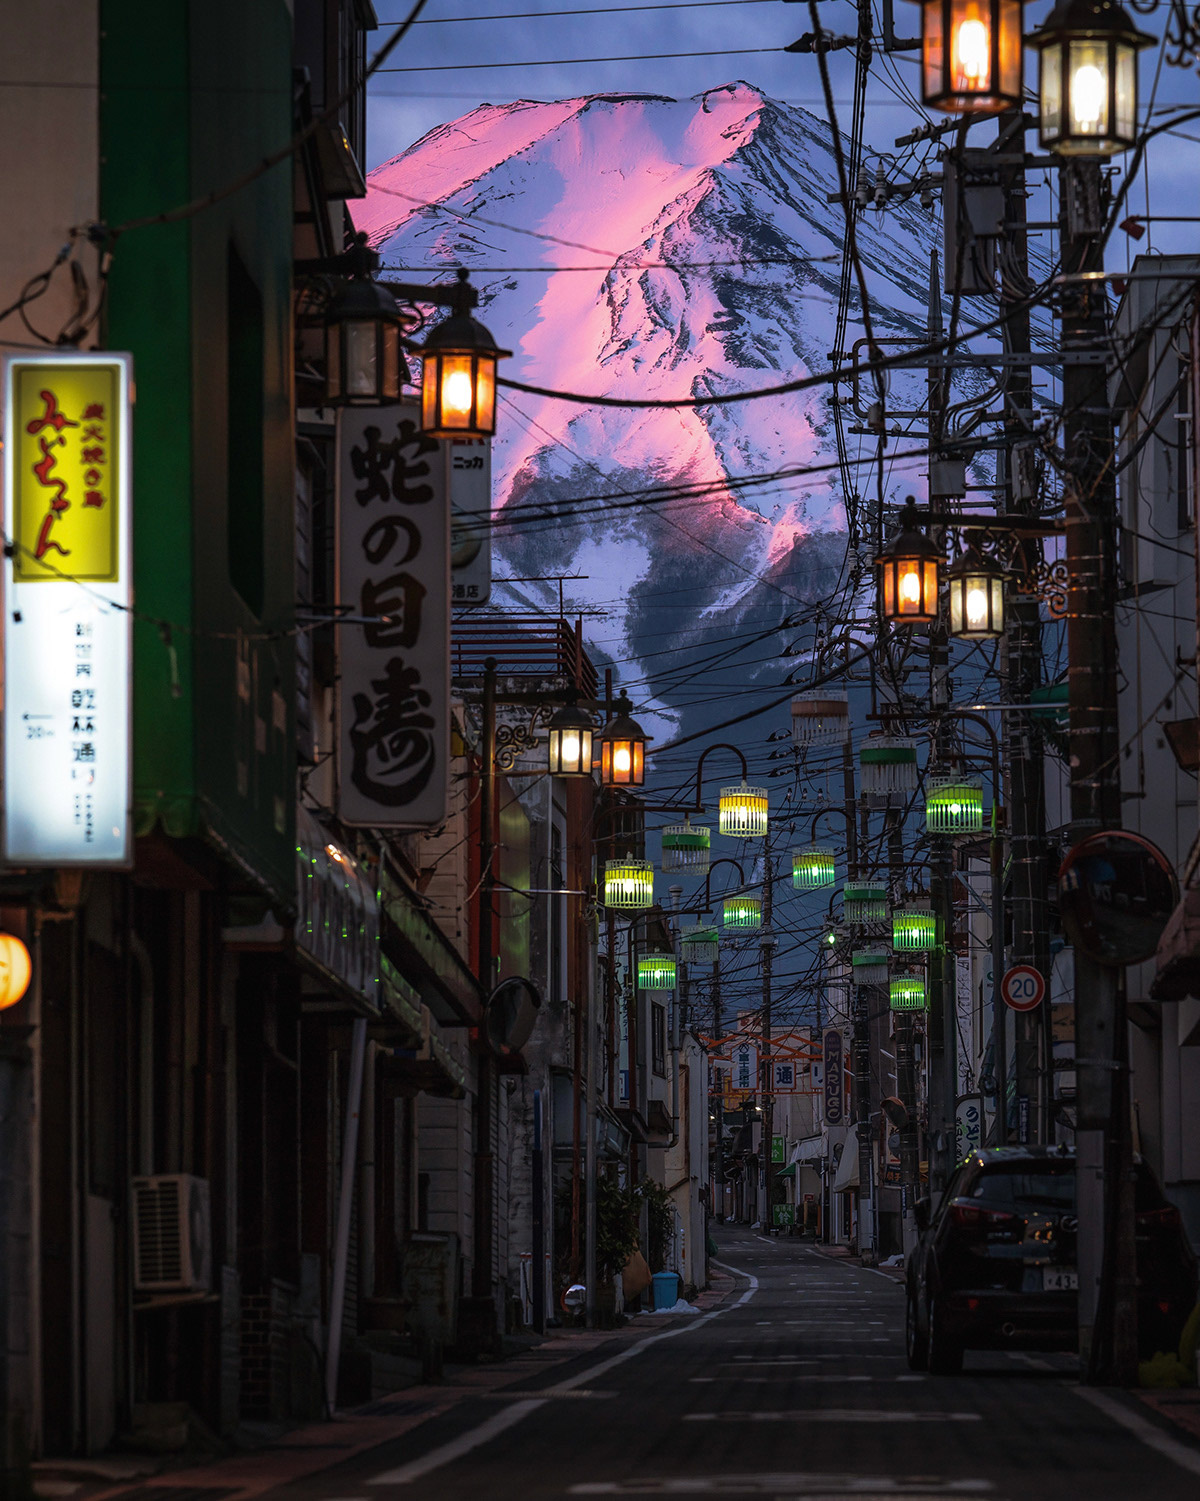 Discover Japan: Travel Photography by Hisa Matsumura